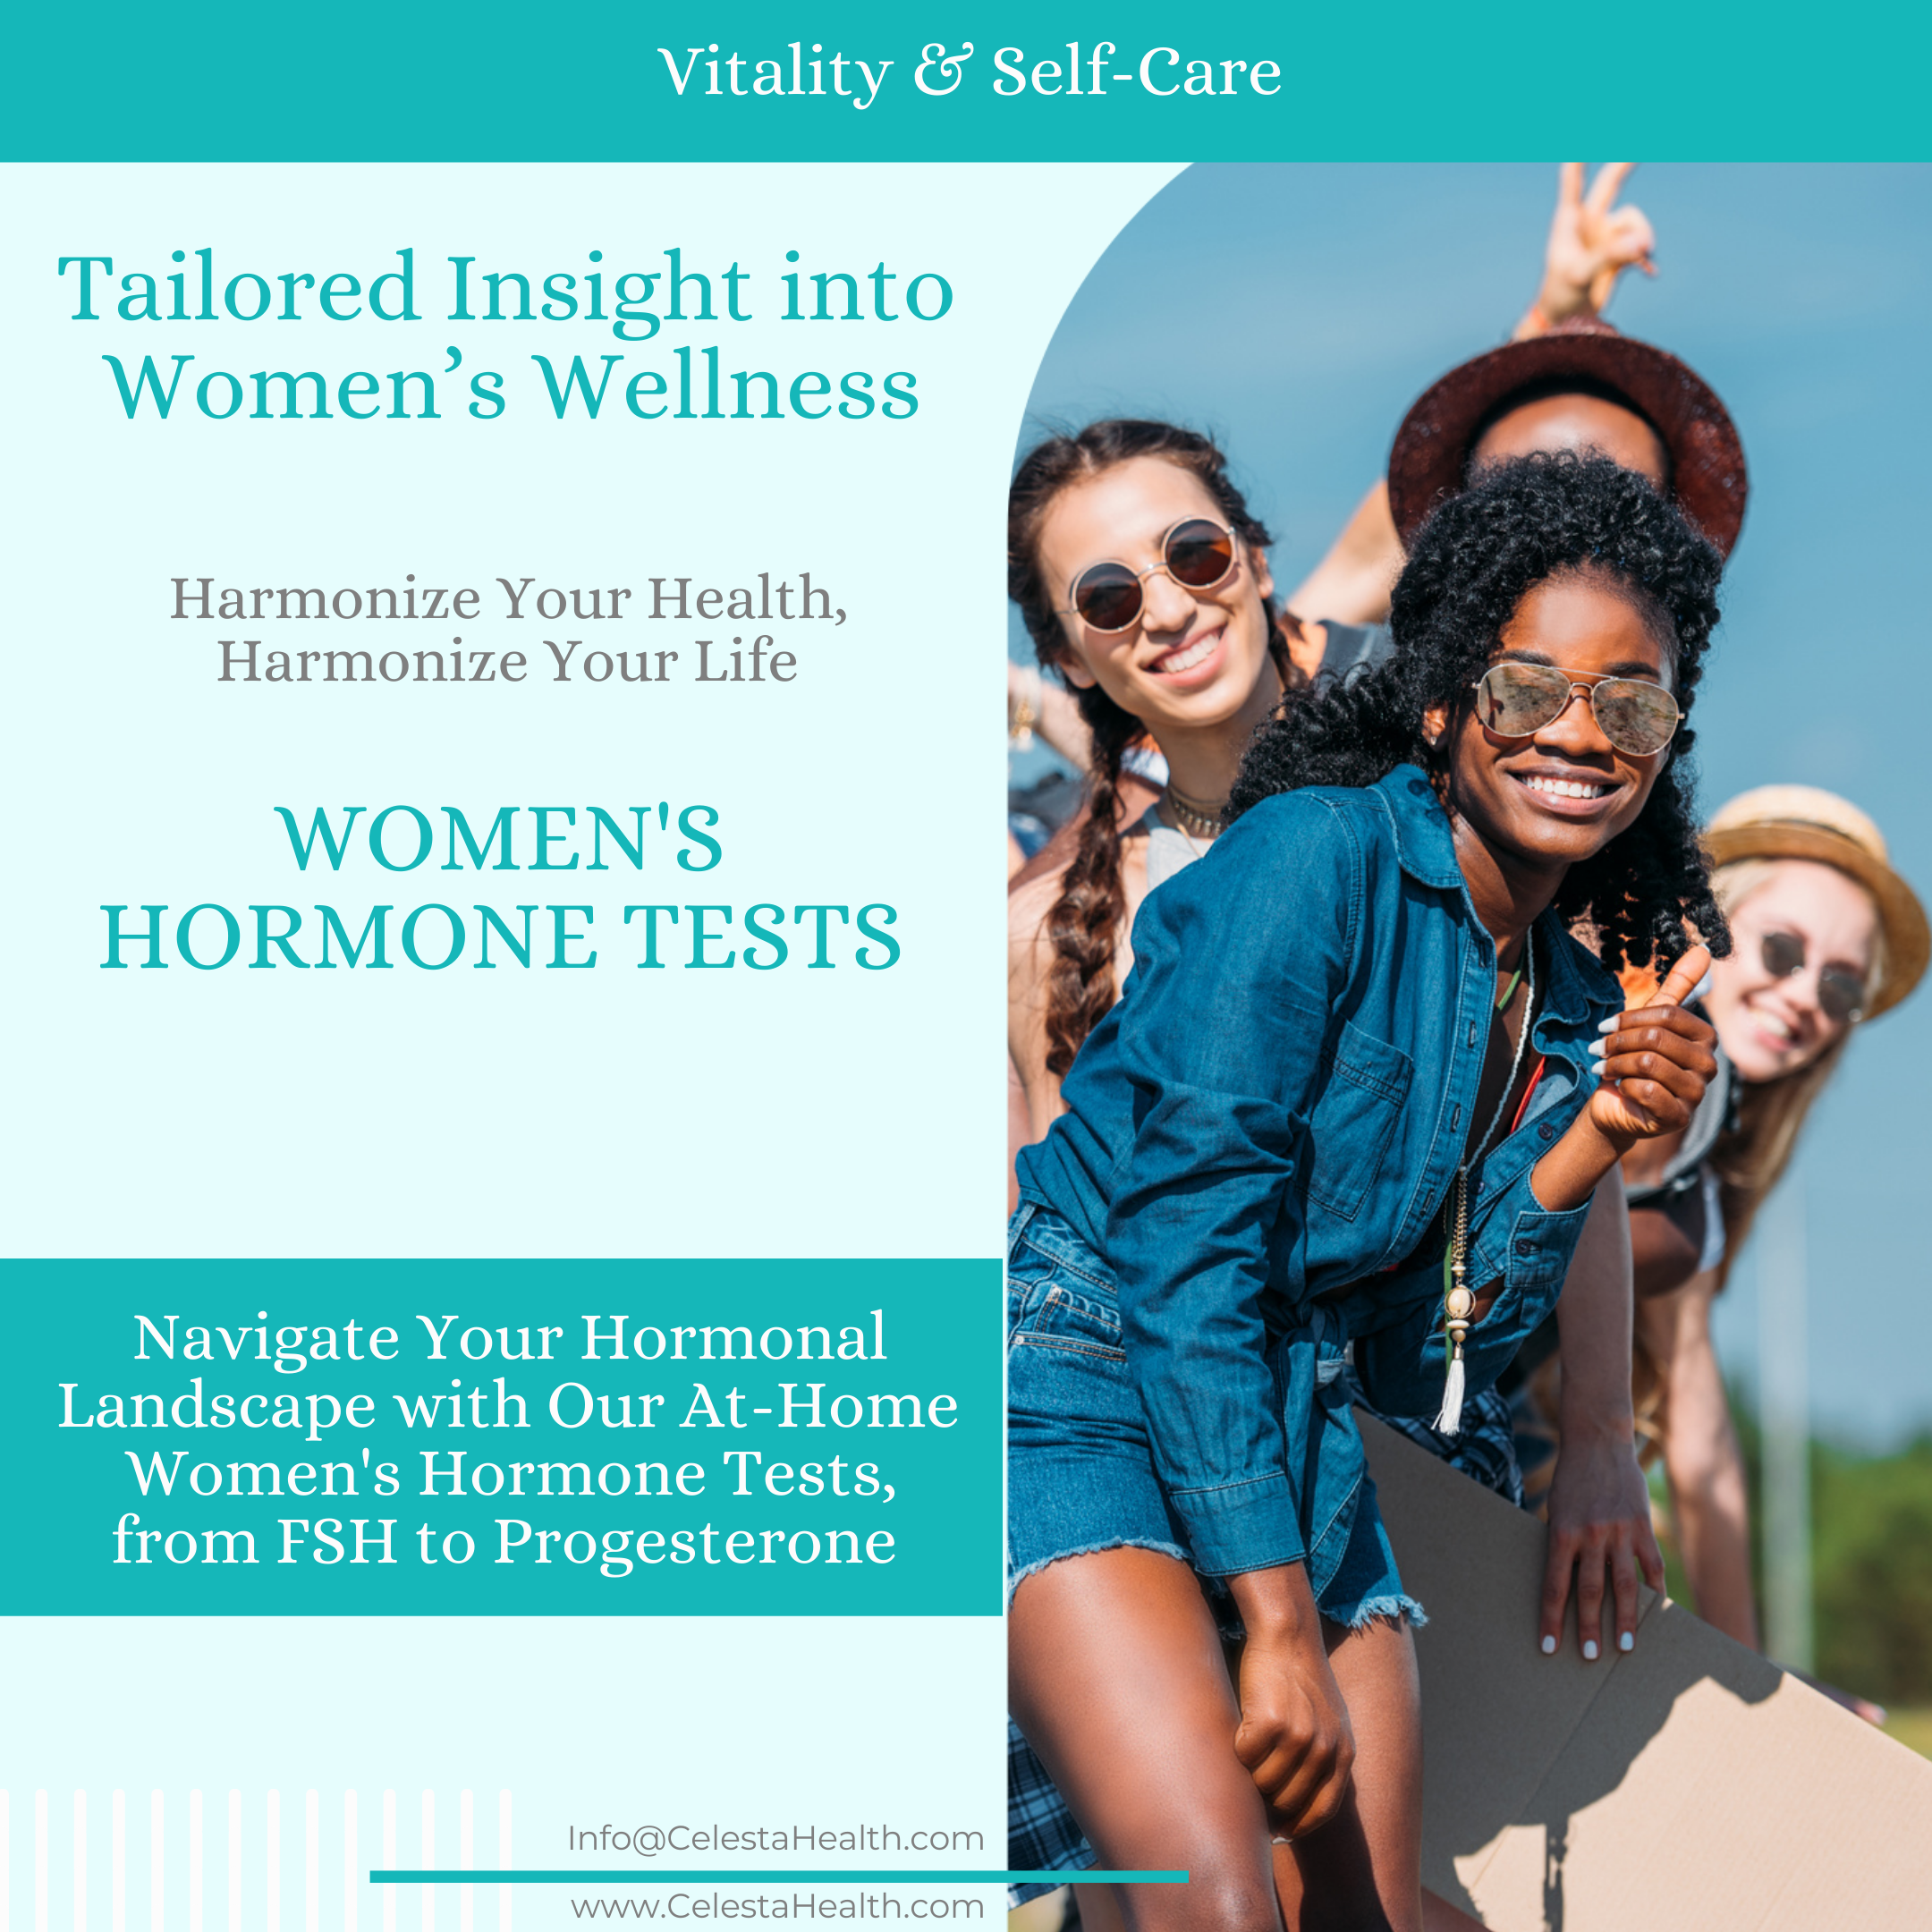 Comprehensive Hormone Tests for Women